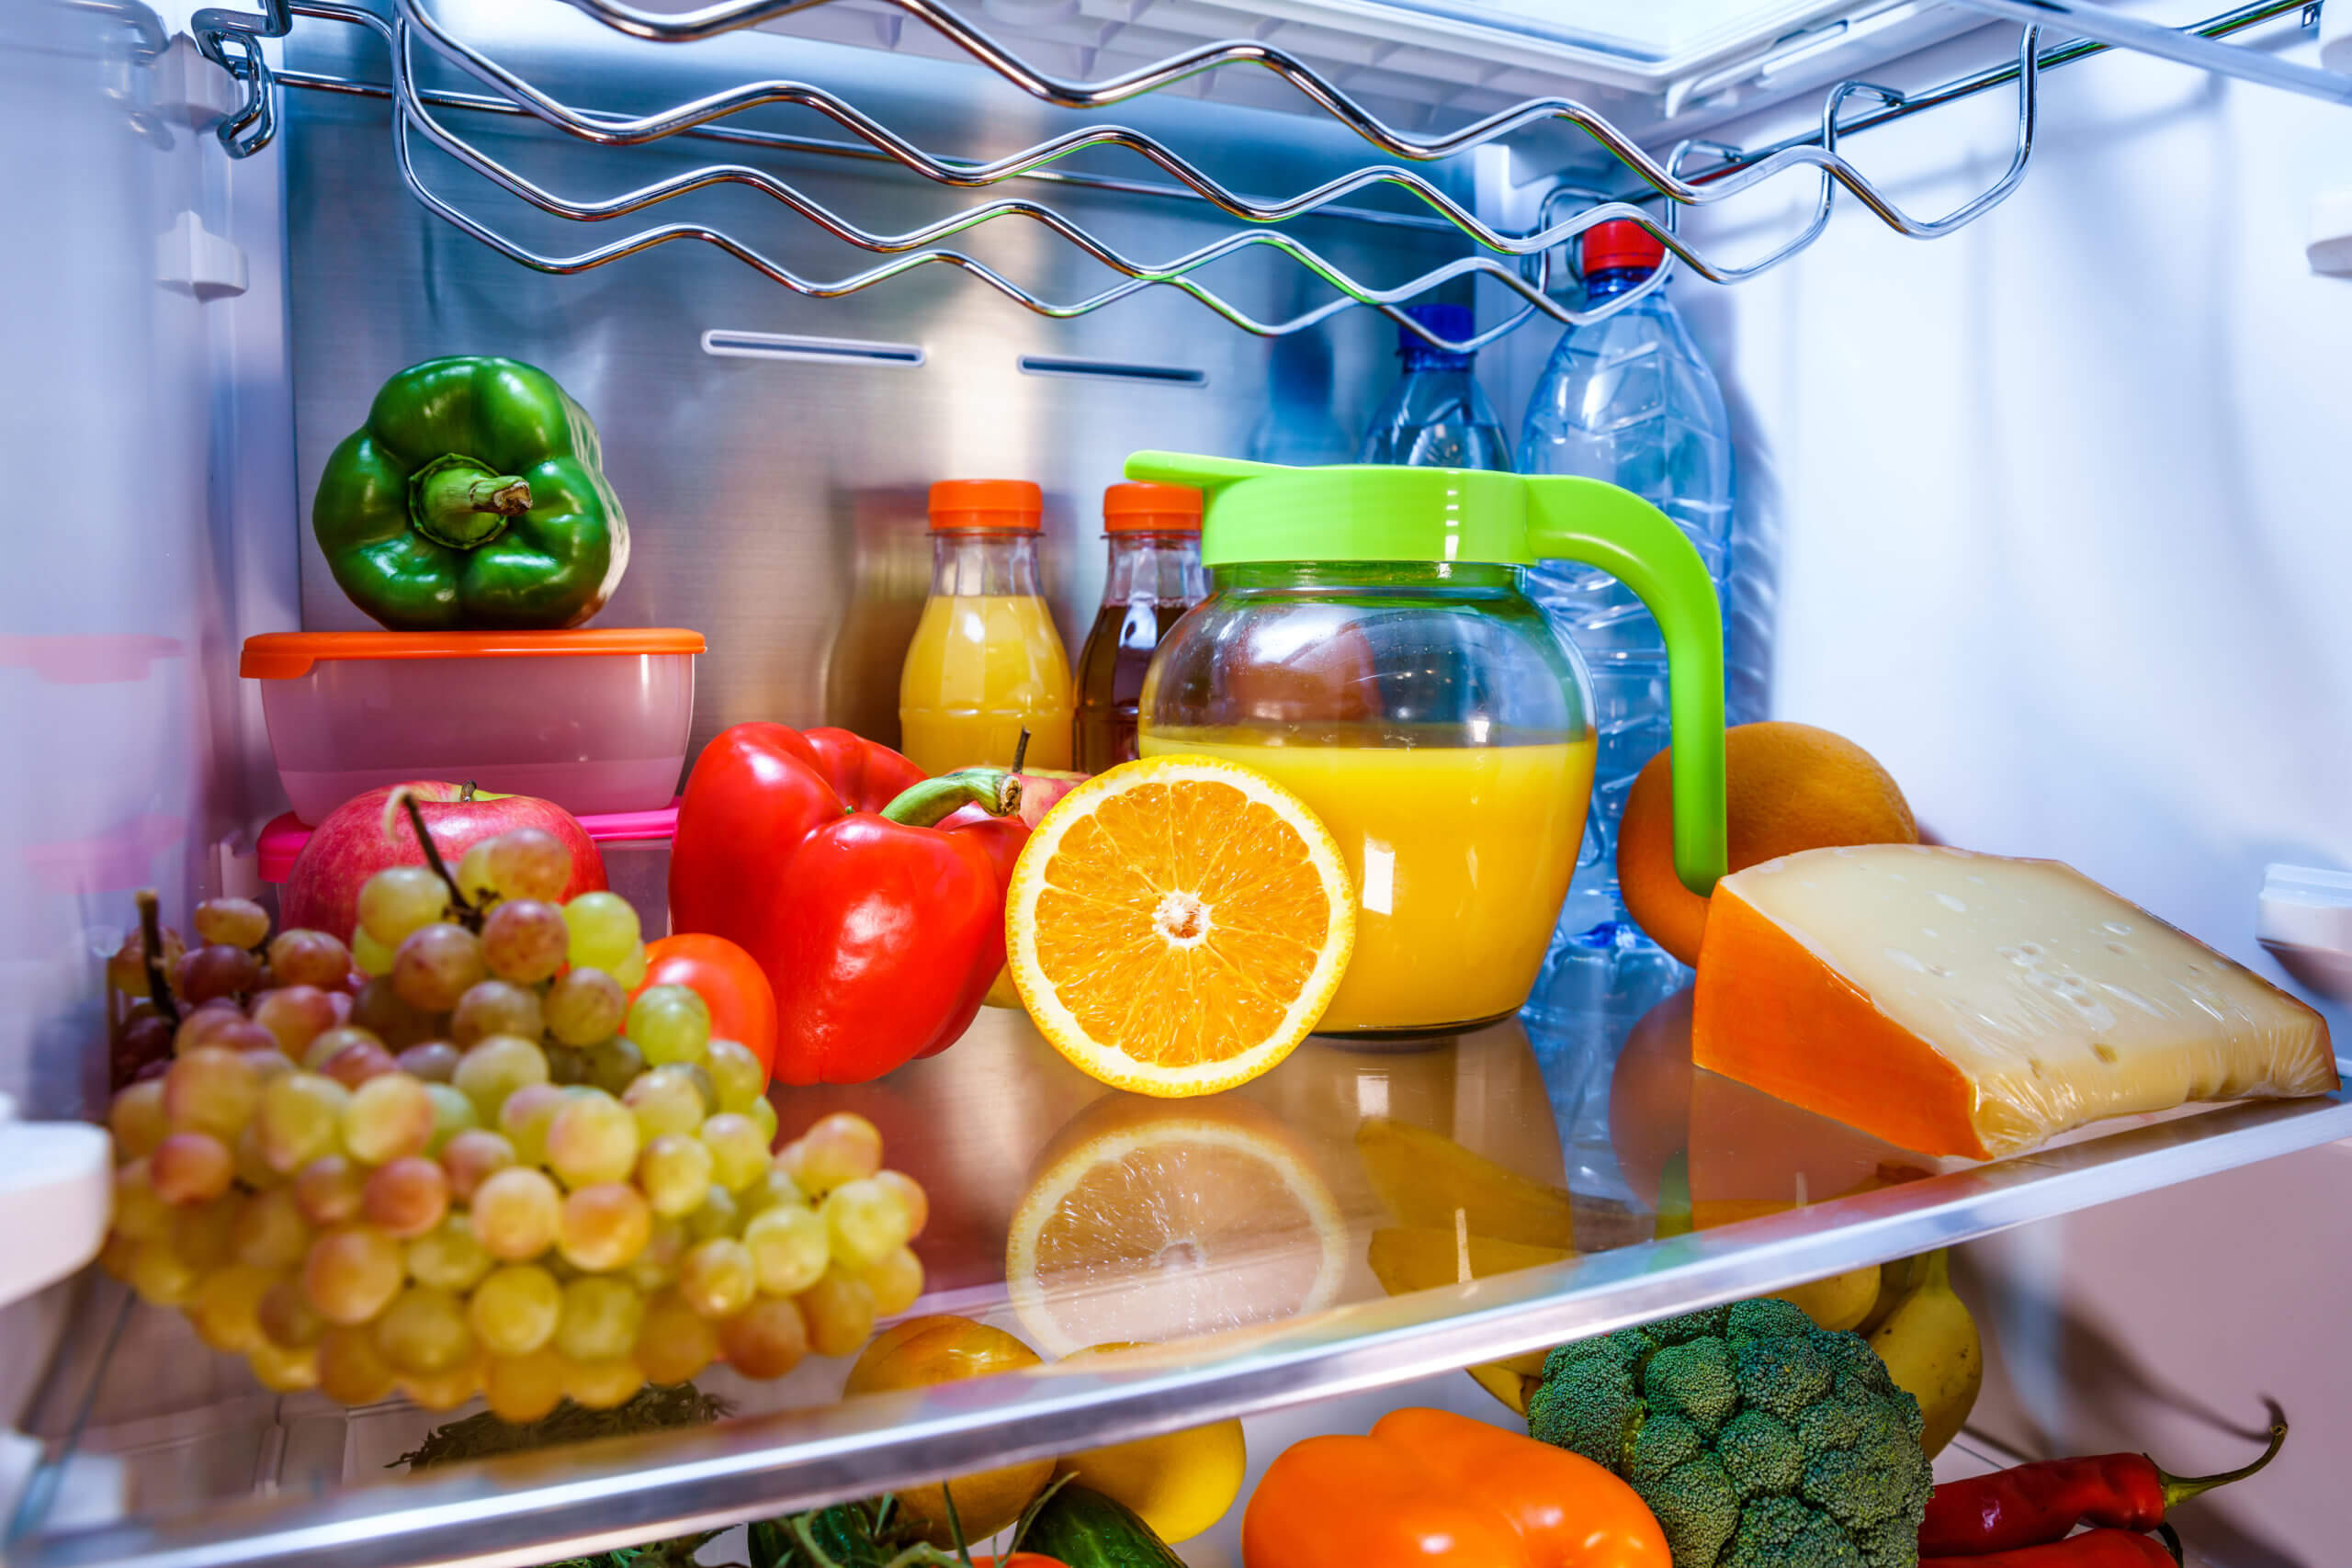 There some juice in the fridge. Холодильник с продуктами. Холодильник с едой. Фрукты в холодильнике. Холодильник для овощей.